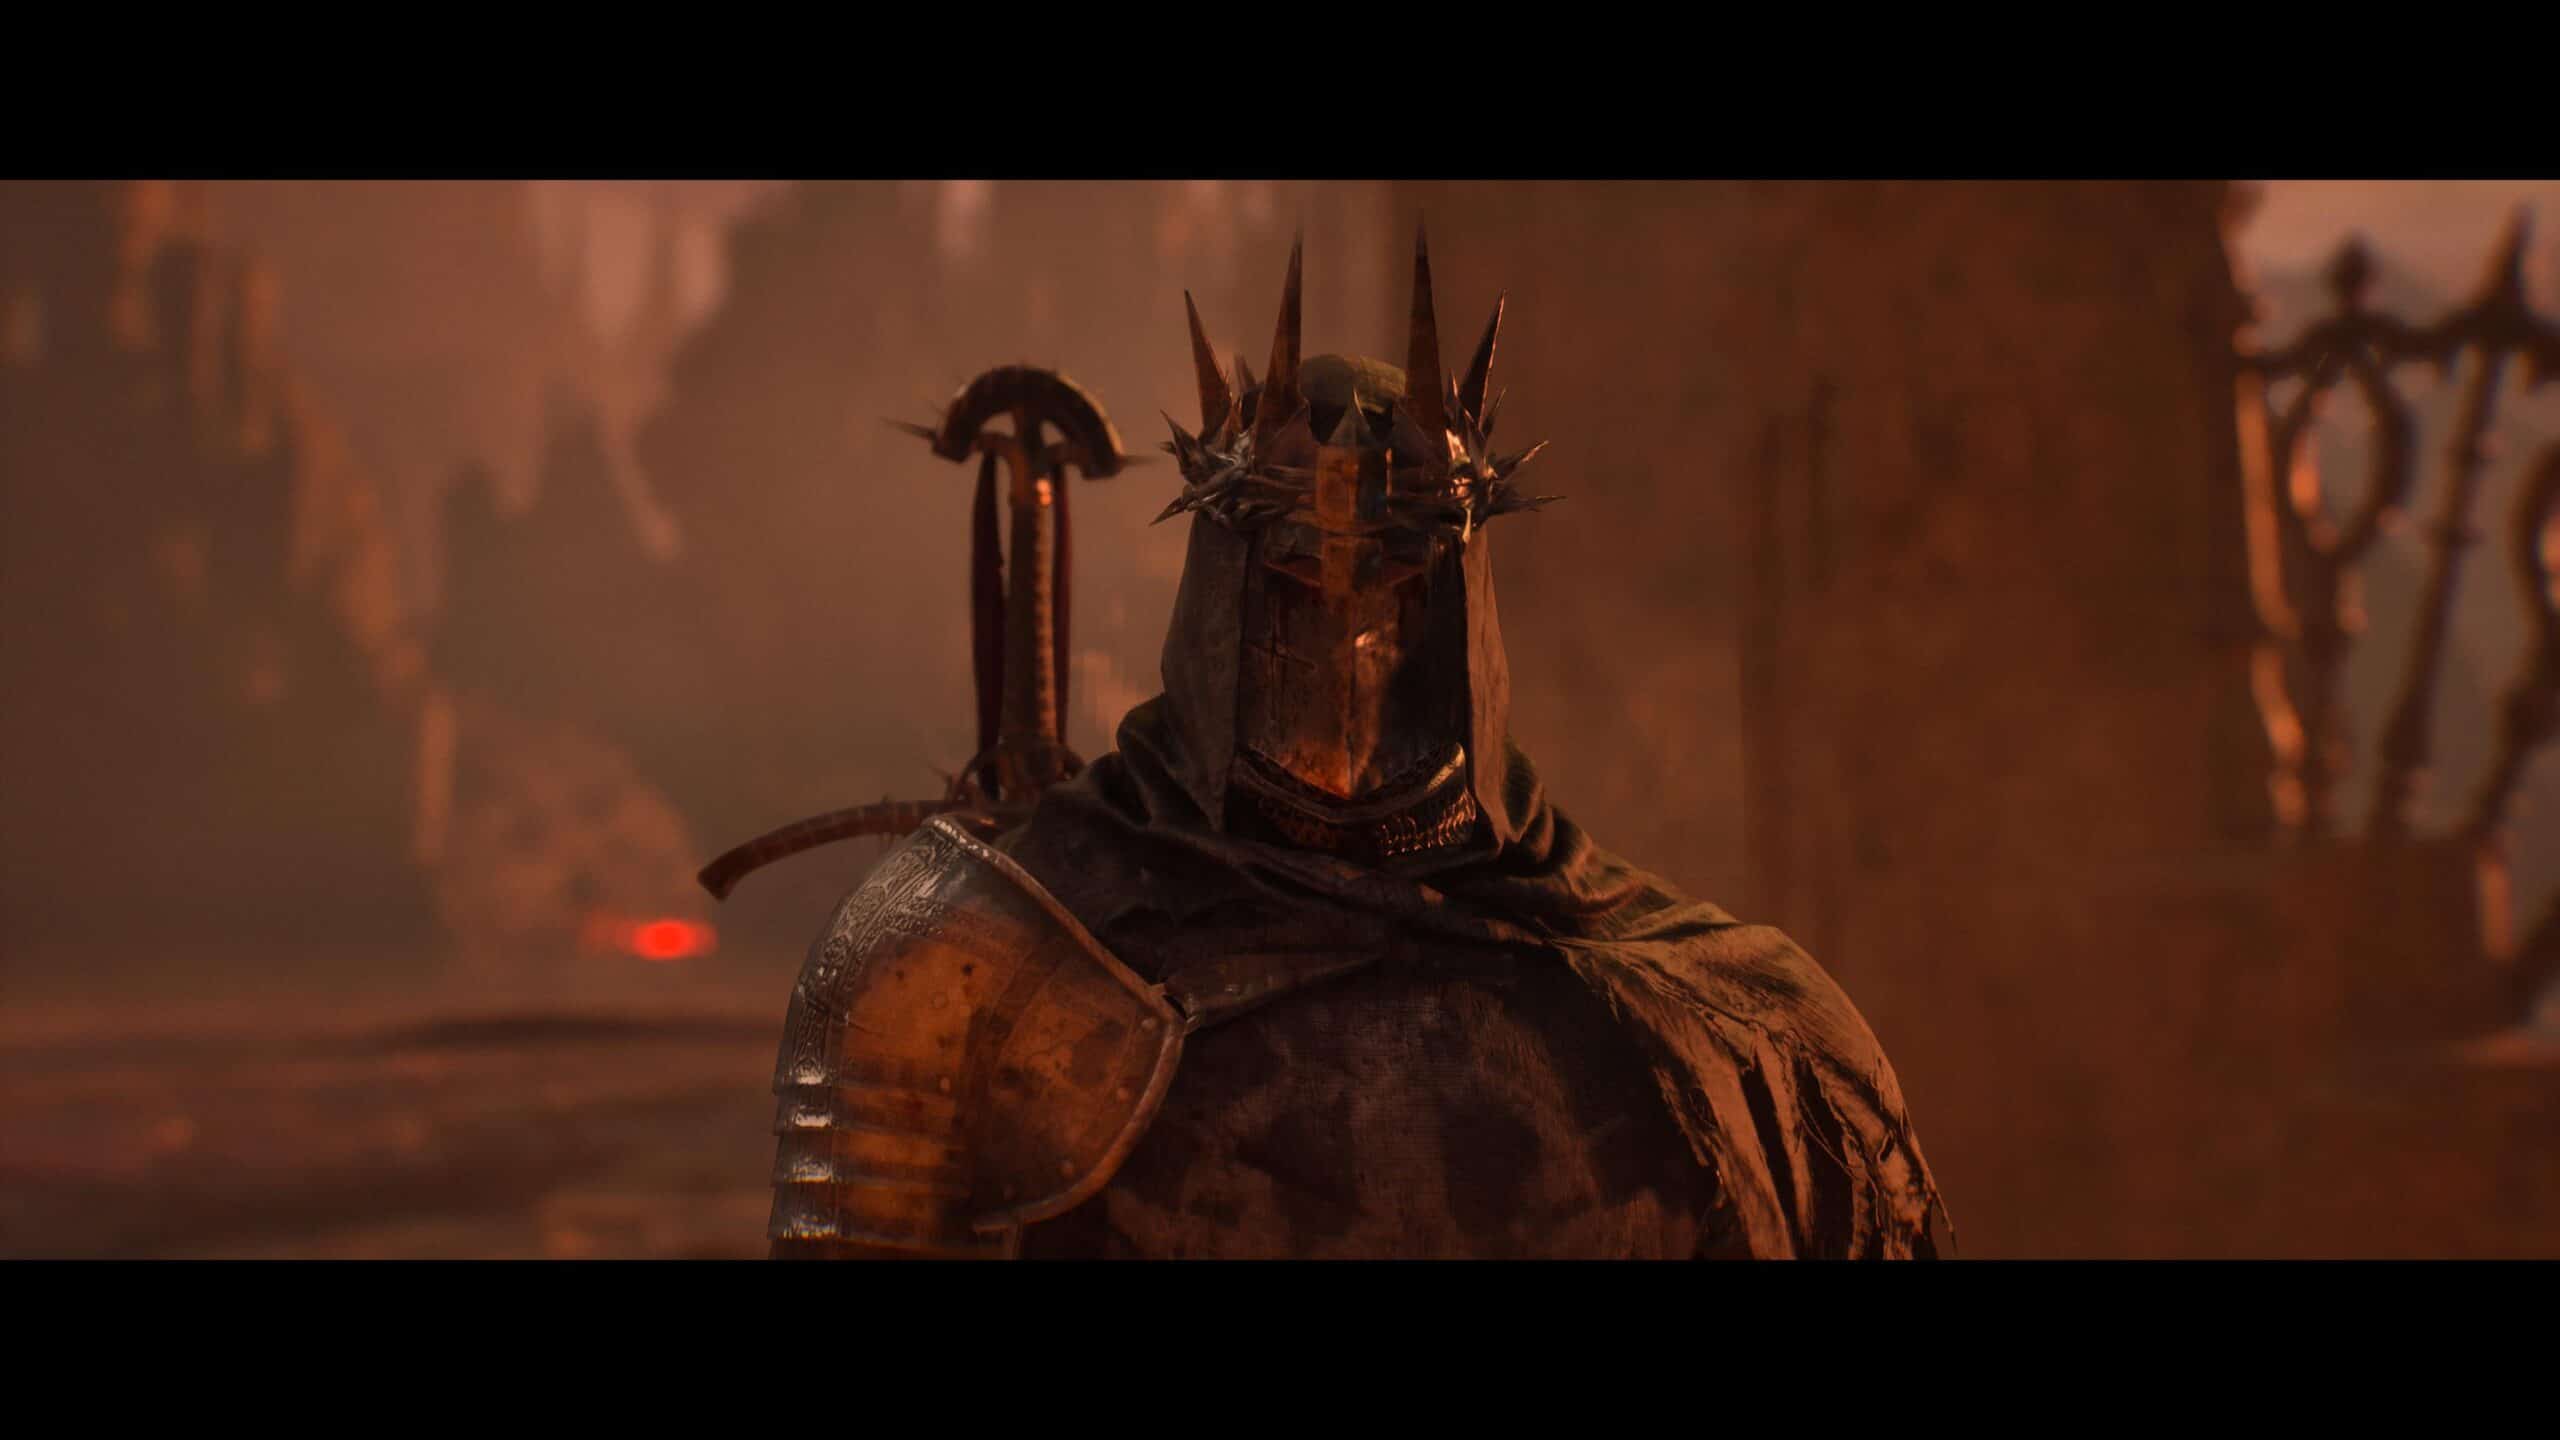 Lords of the Fallen ganha trailer mostrando poder gráfico; assista